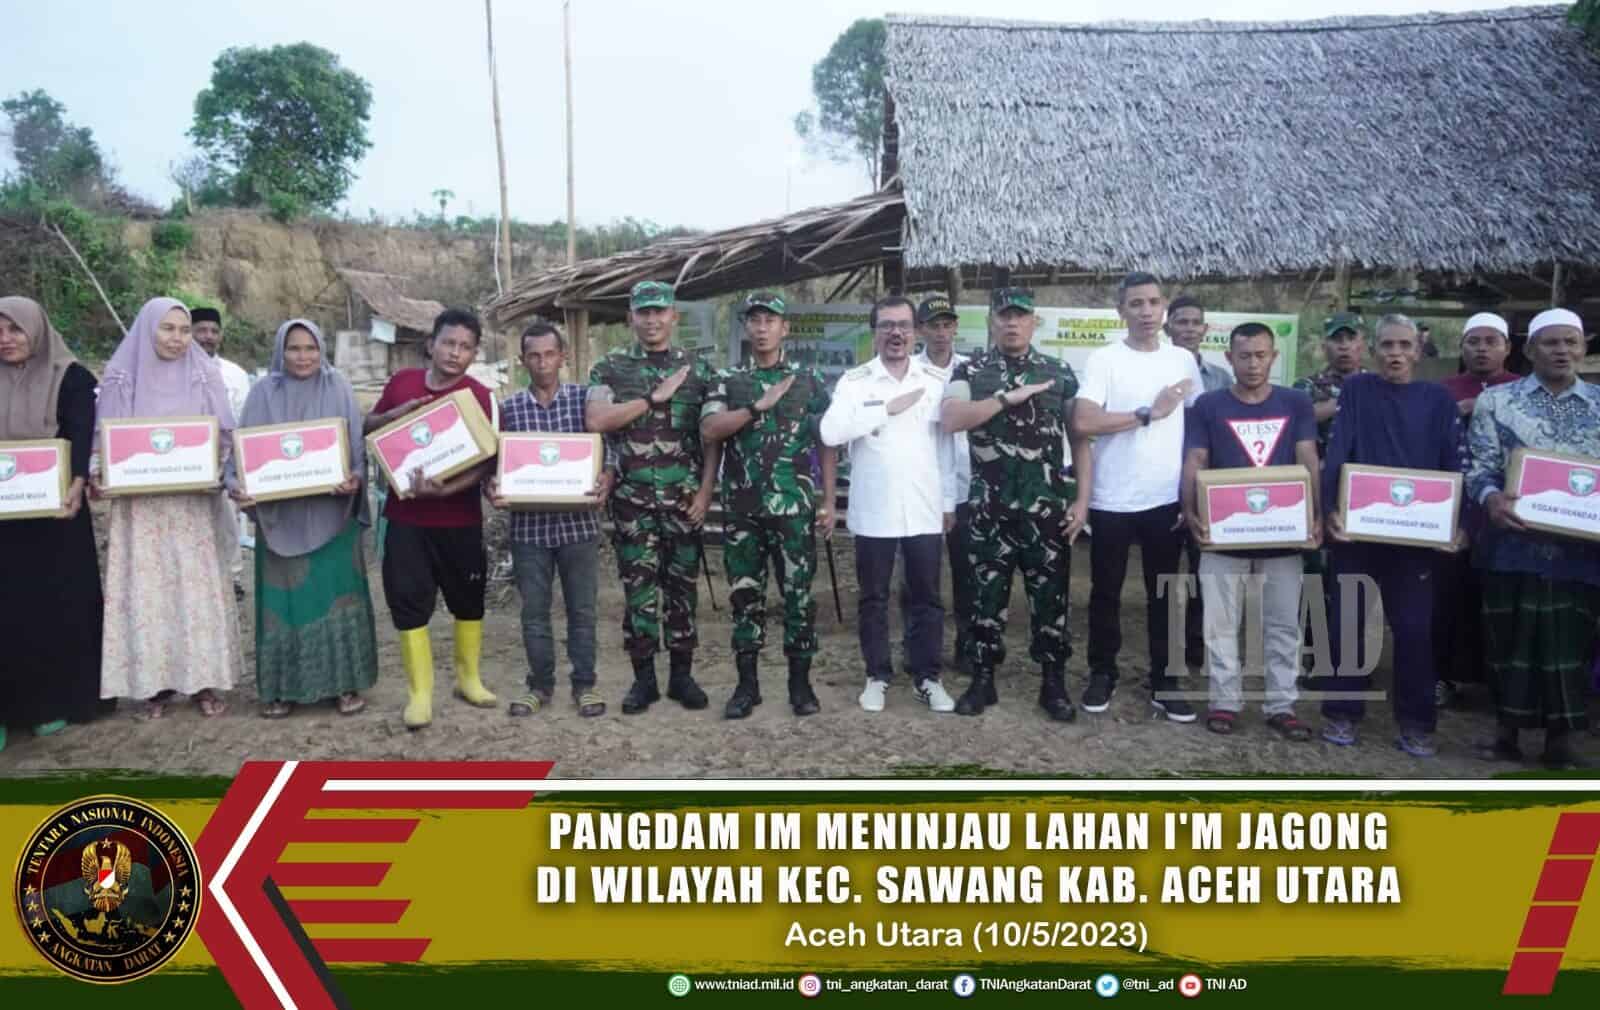 Pangdam IM meninjau lahan I'M Jagong di Wilayah Kec. Sawang Kab. Aceh Utara